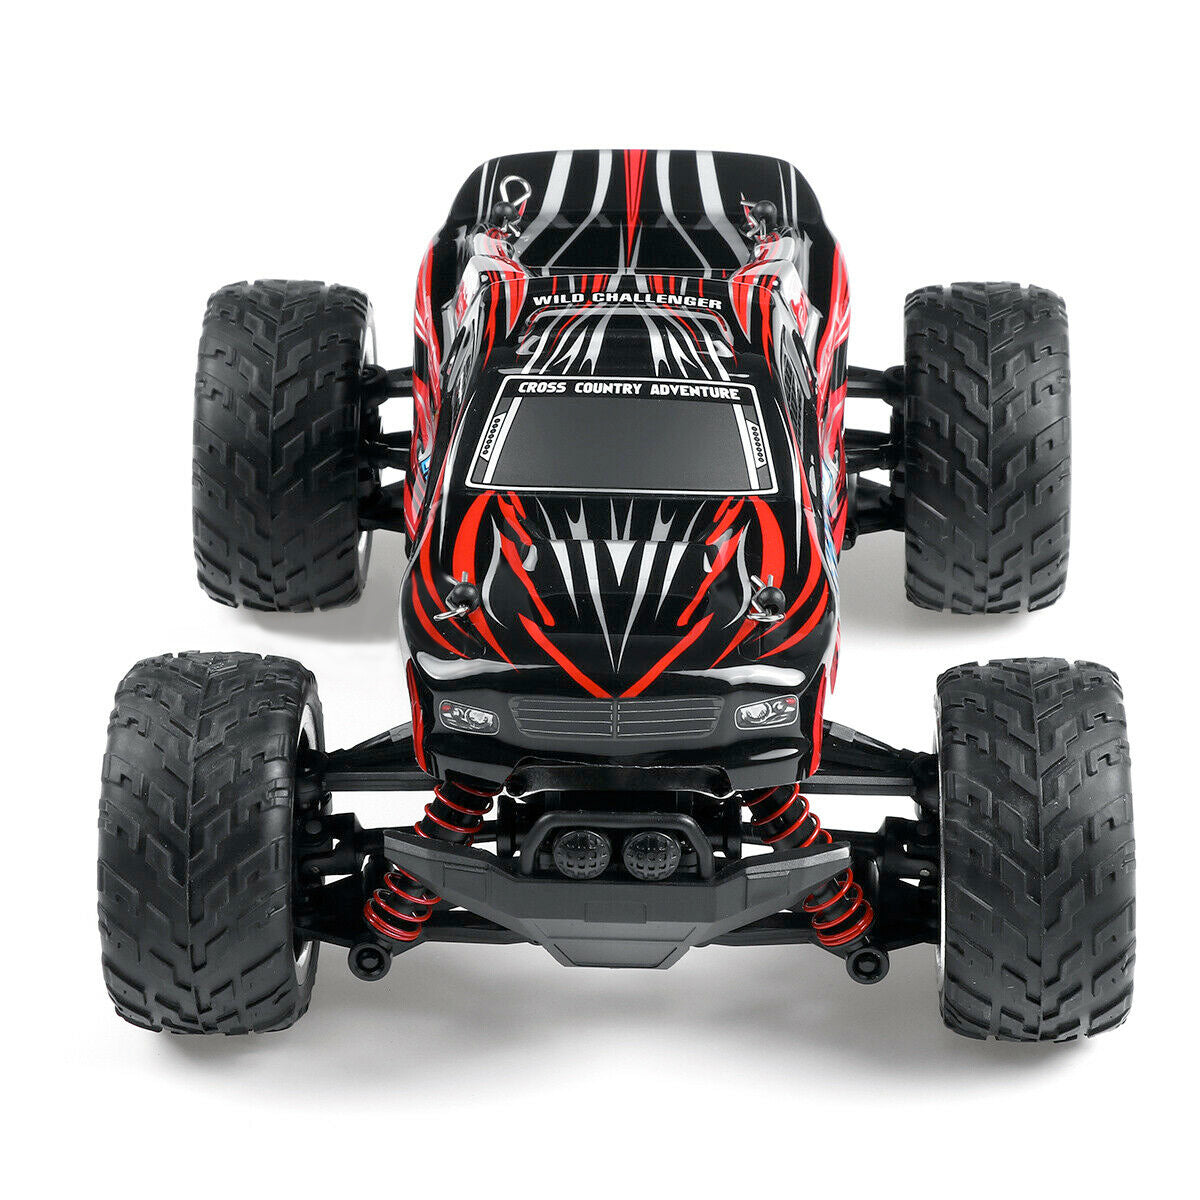 Ninja Dragon 1/20 Scale High Speed Rock Crawler RC Monster Truck